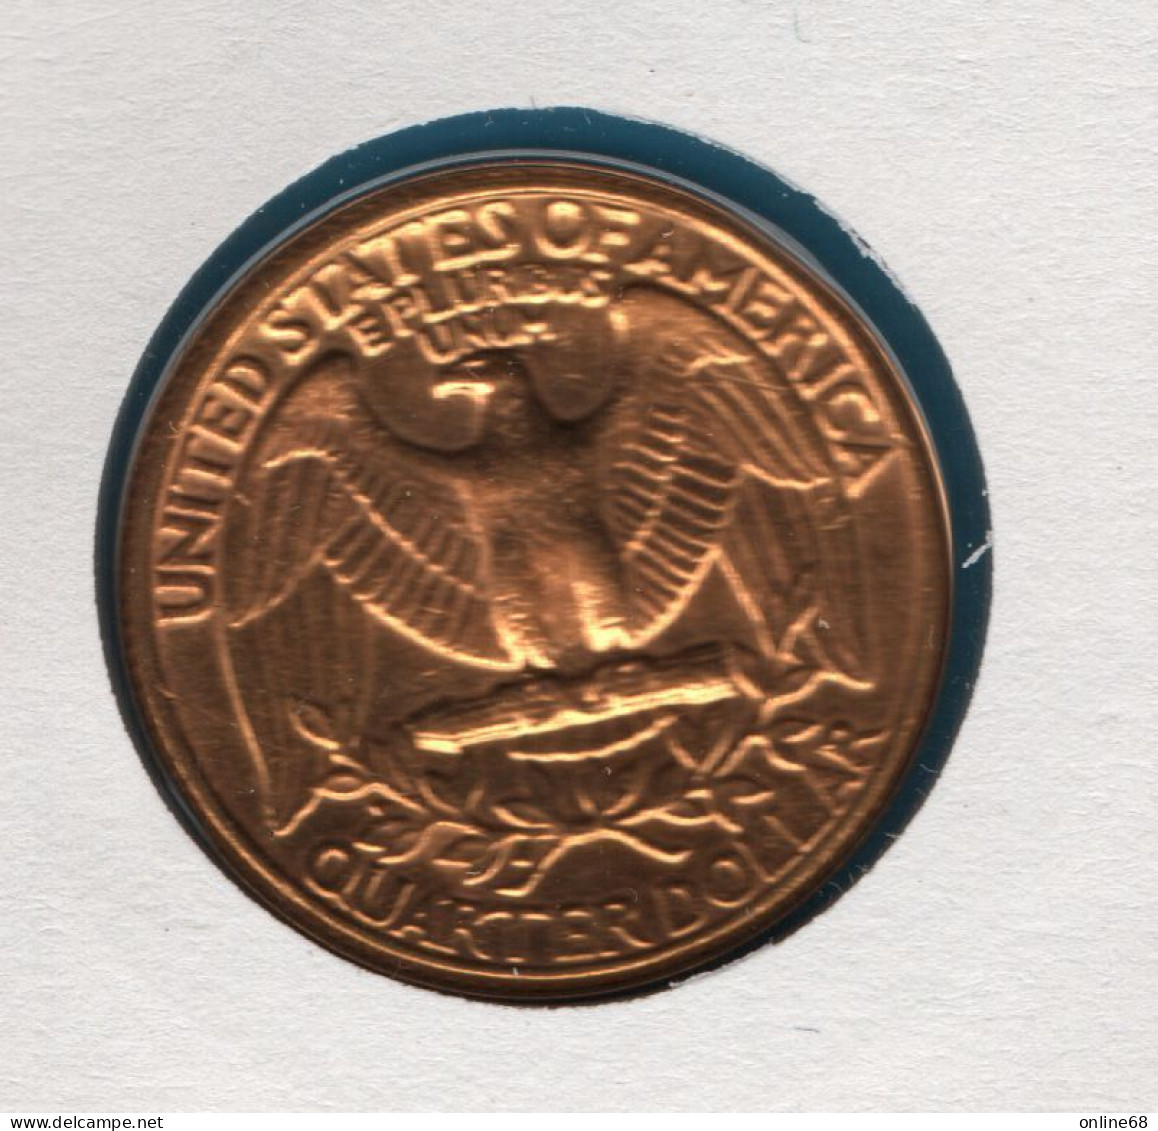 USA NUMISLETTER 1/4 DOLLAR 1985 D KM# 164a Washington Quarter VERGOLDET GOLD PLATED - 1932-1998: Washington